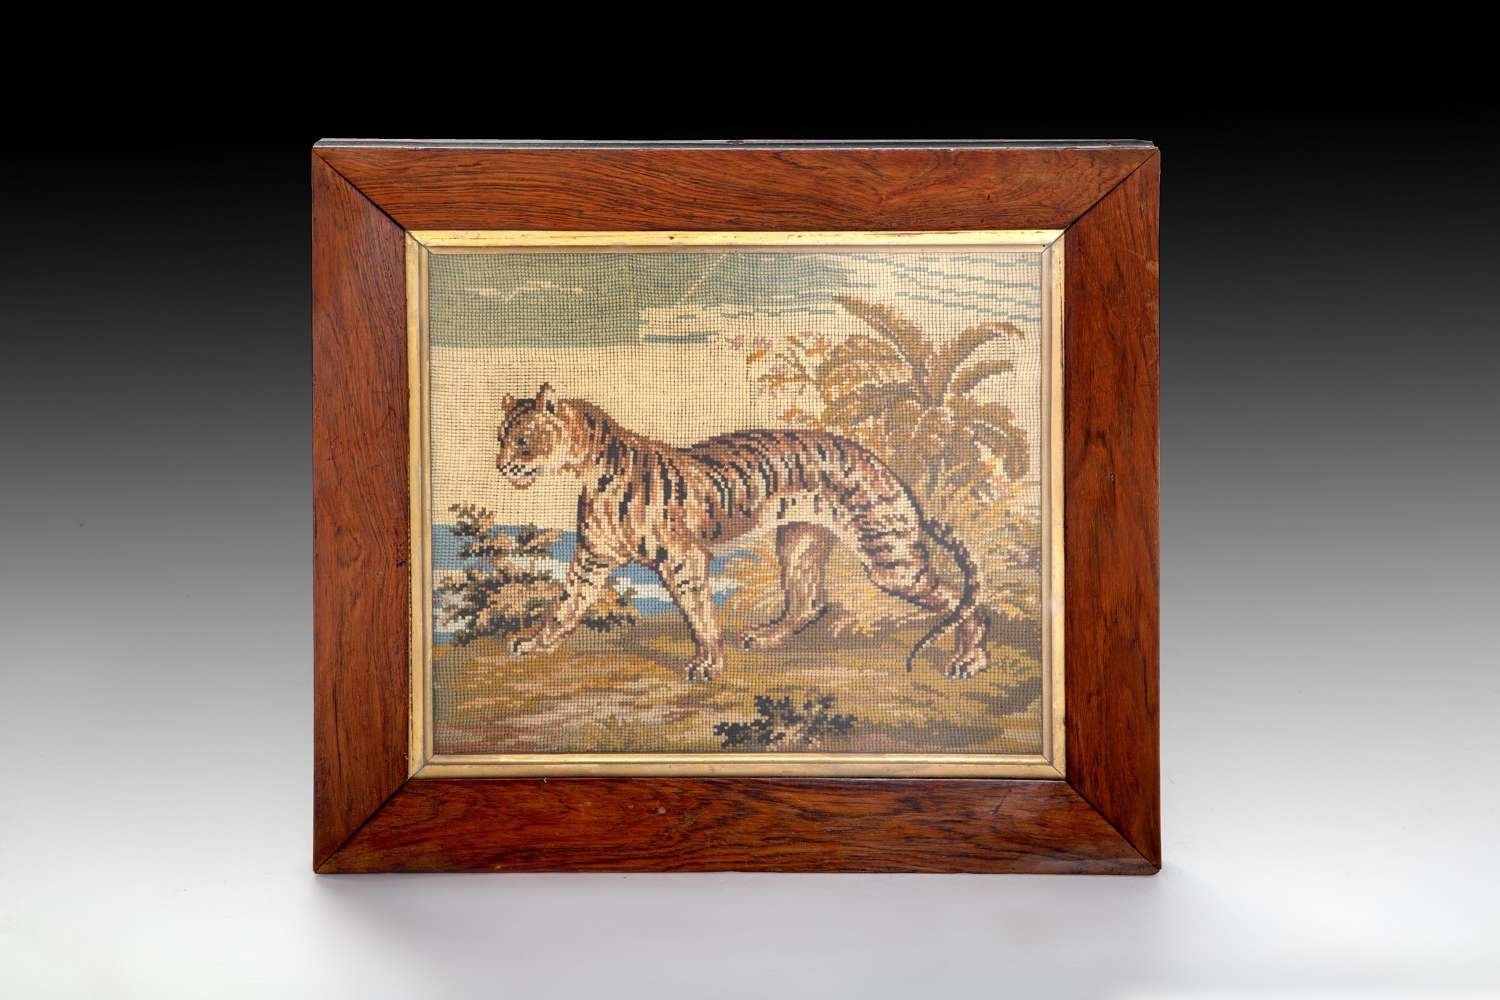 A 19th century needlework tiger